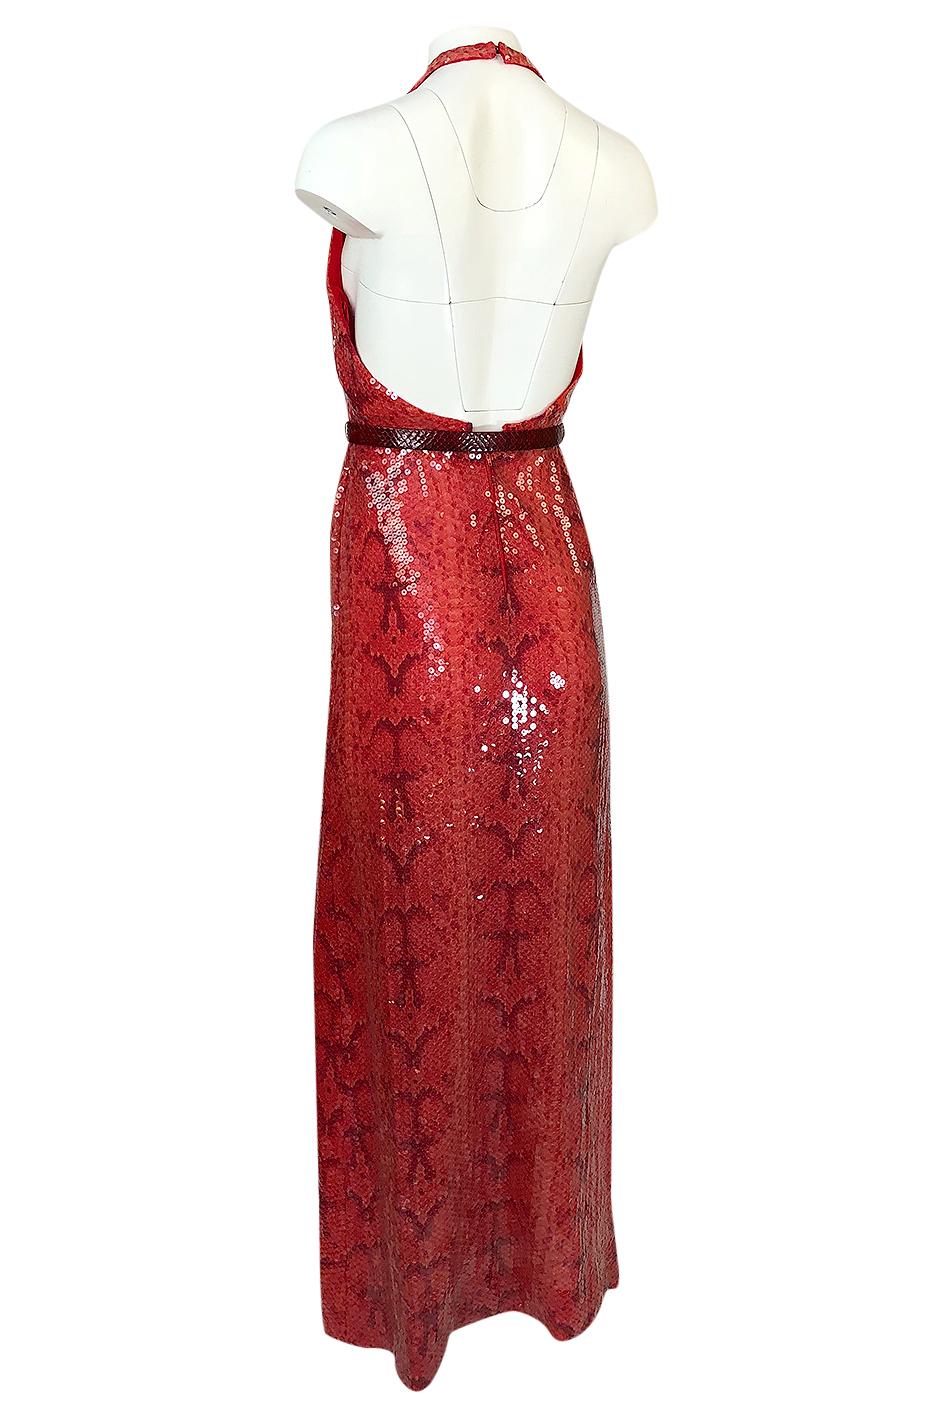 Women's Bill Blass Red Sequin Snakeskin Print Halter Dress, 1974 